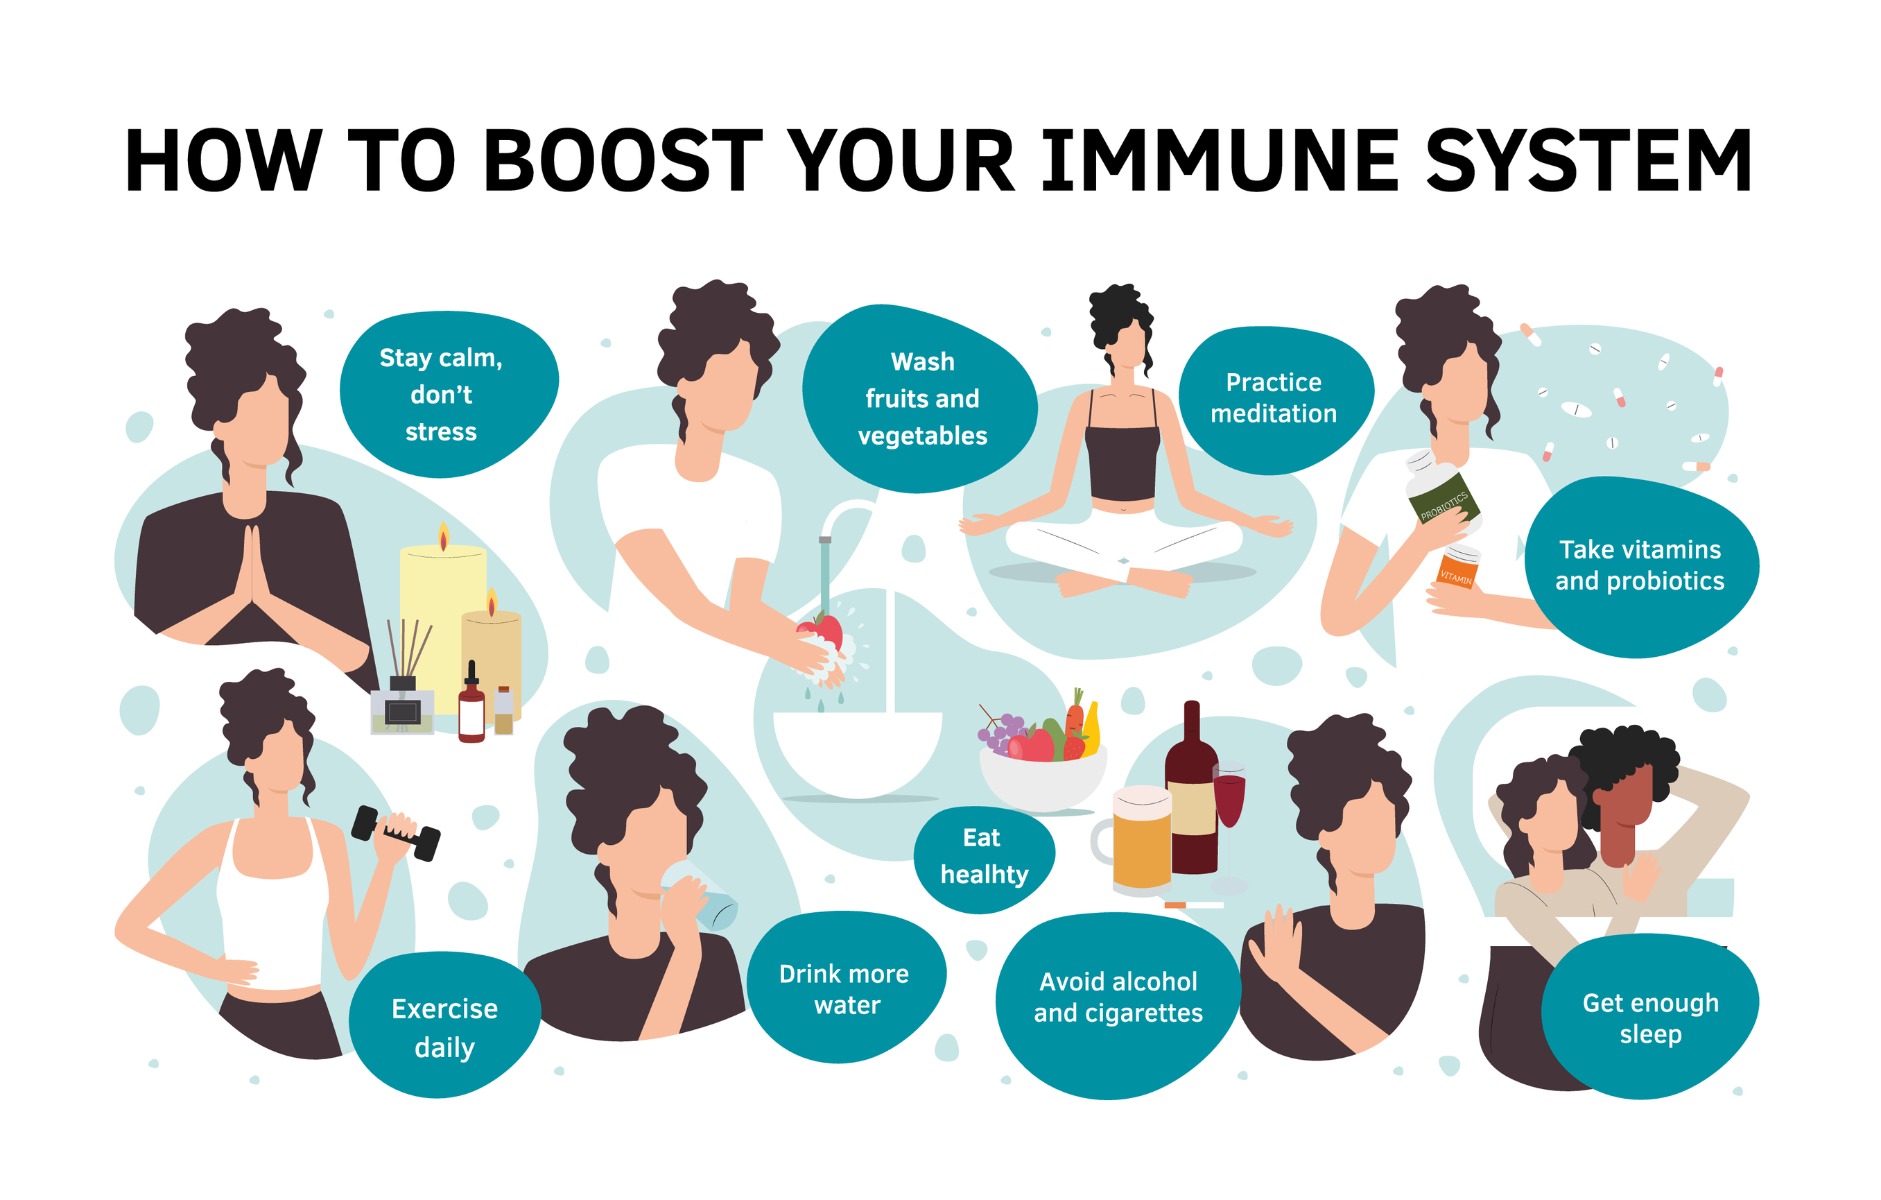 Enhancing immune function